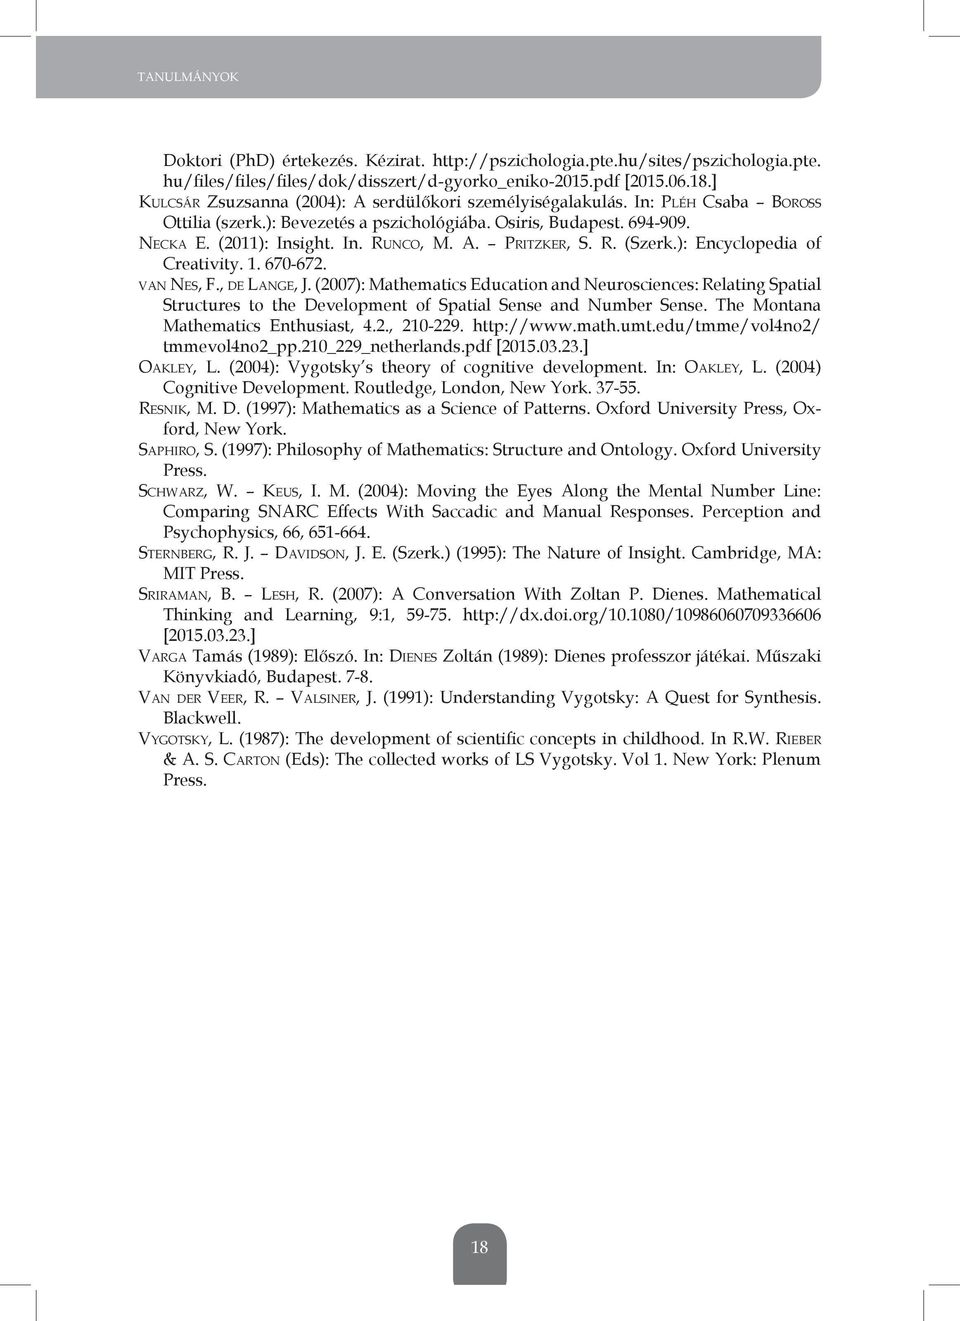 R. (szerk.): encyclopedia of Creativity. 1. 670-672. VAN NES, F., DE LANGE, J.